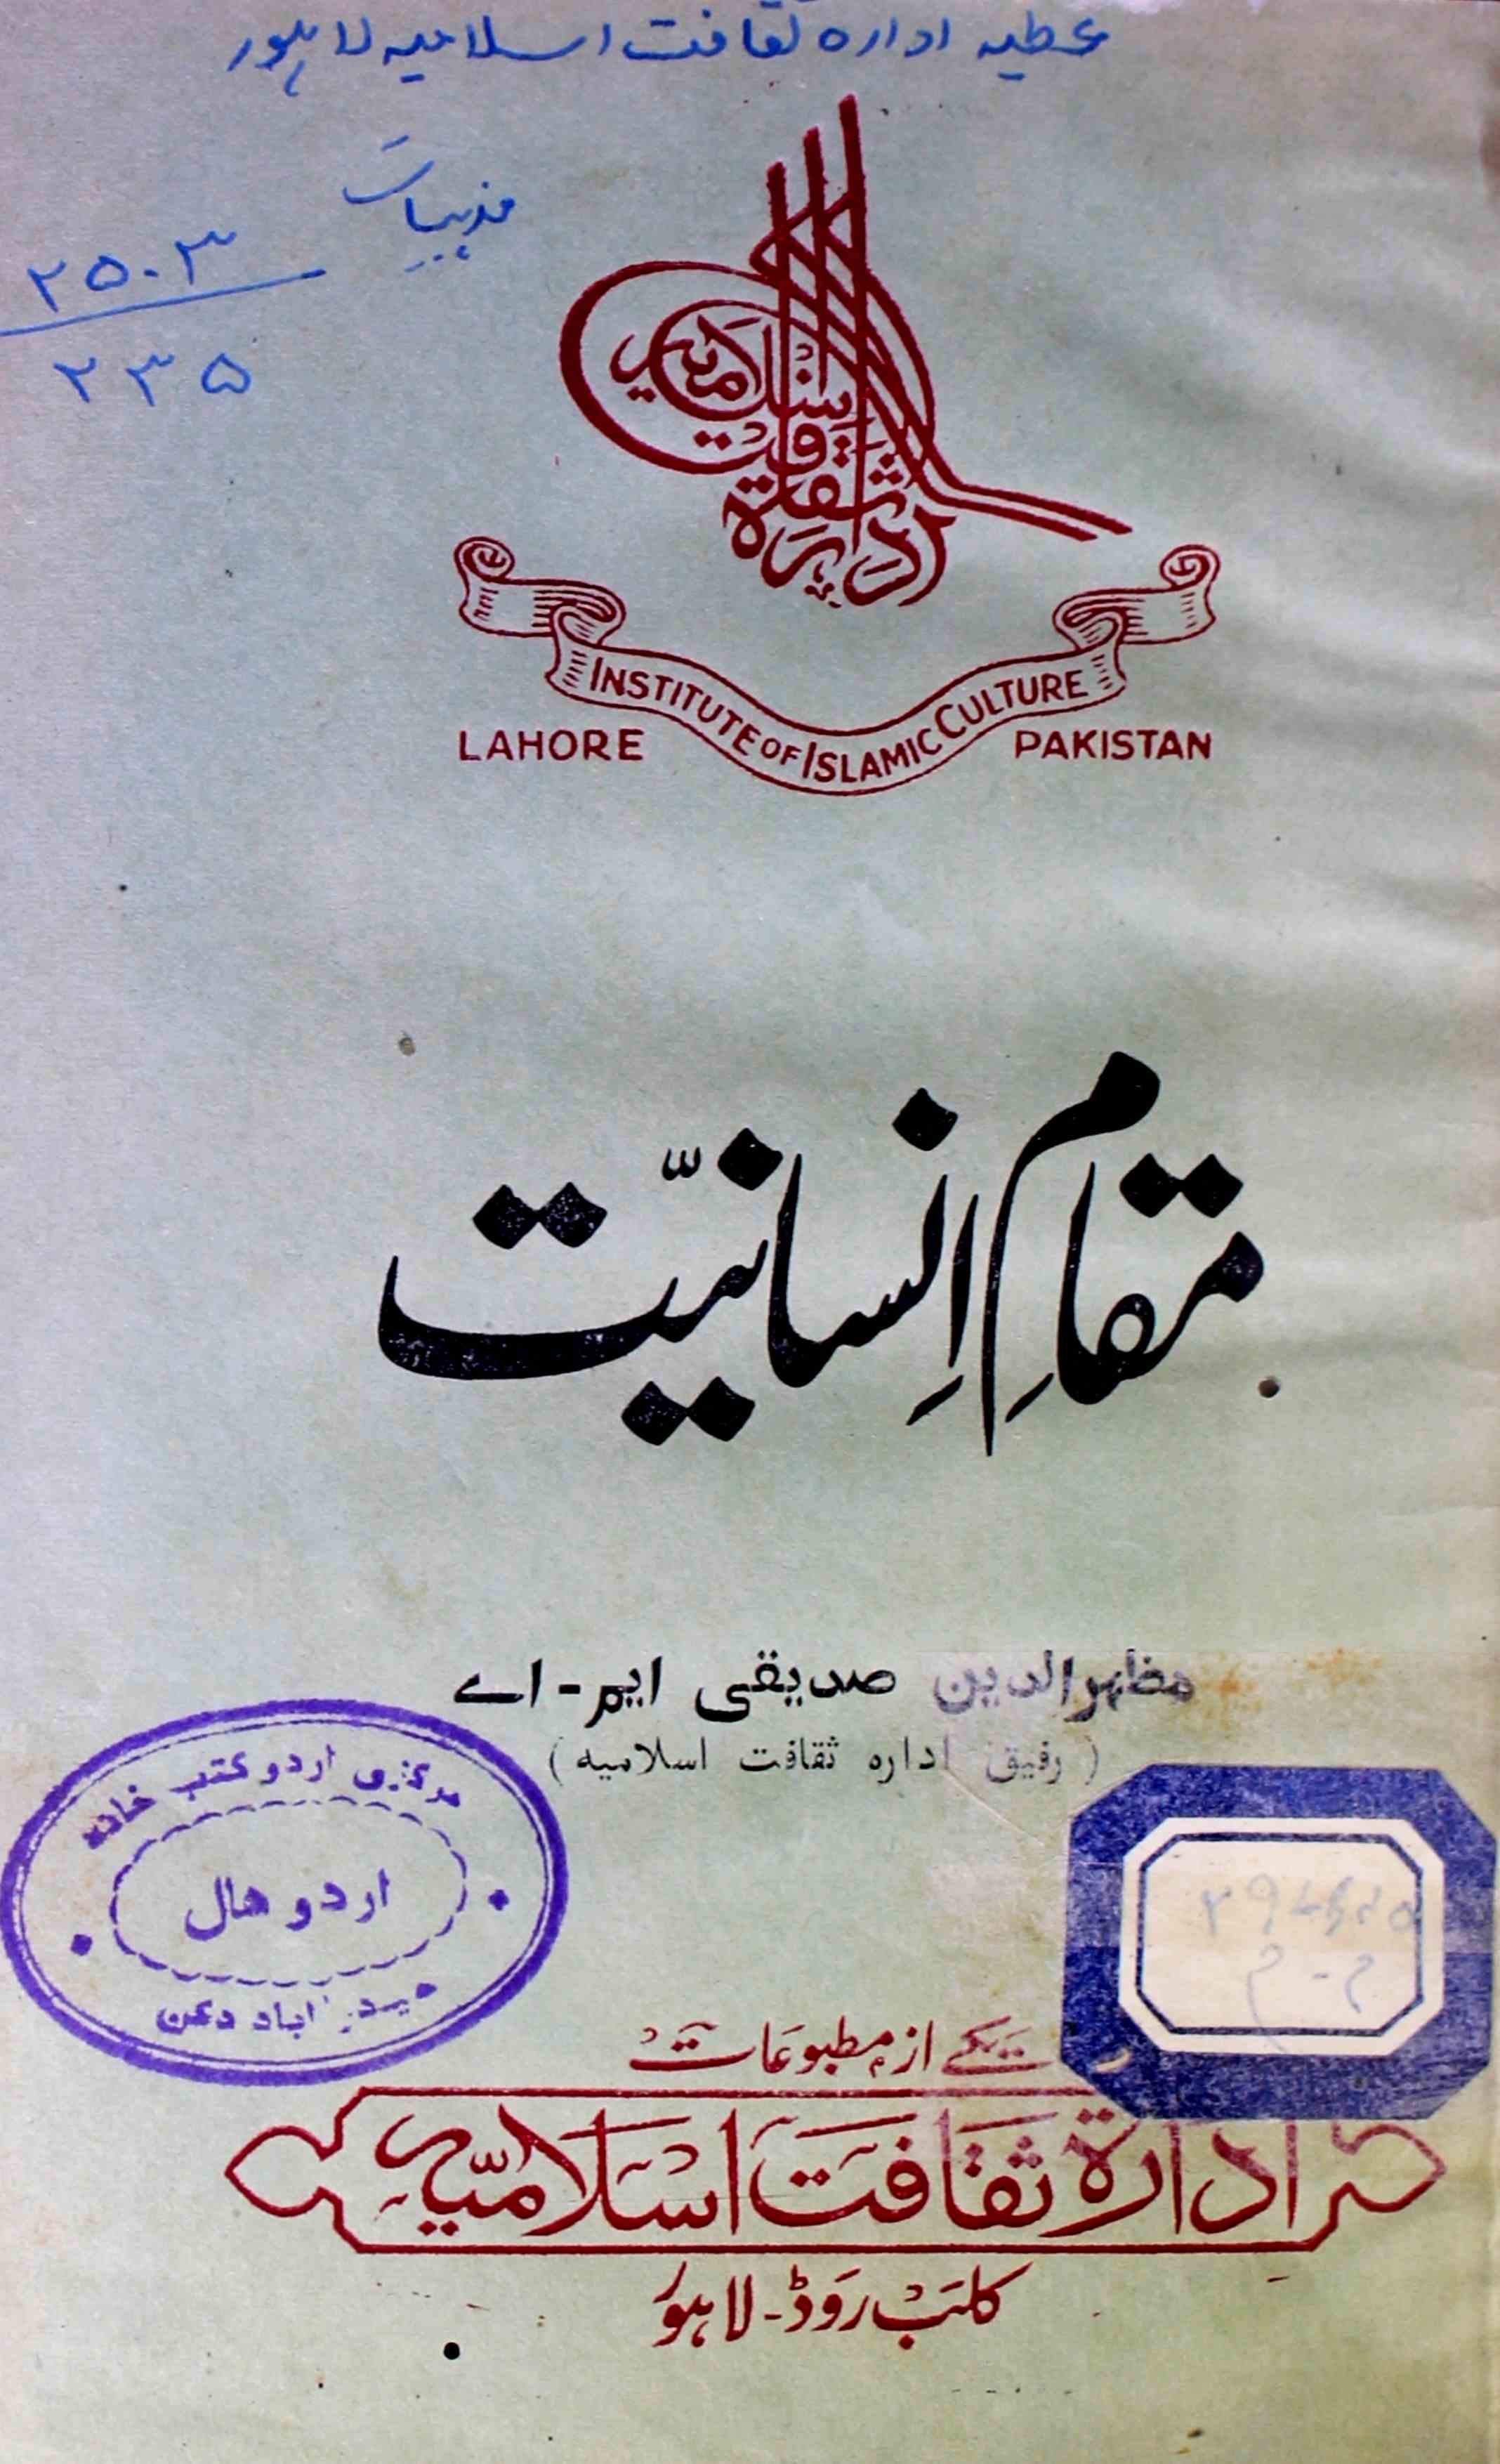 Muqam-e-Insaniyyat